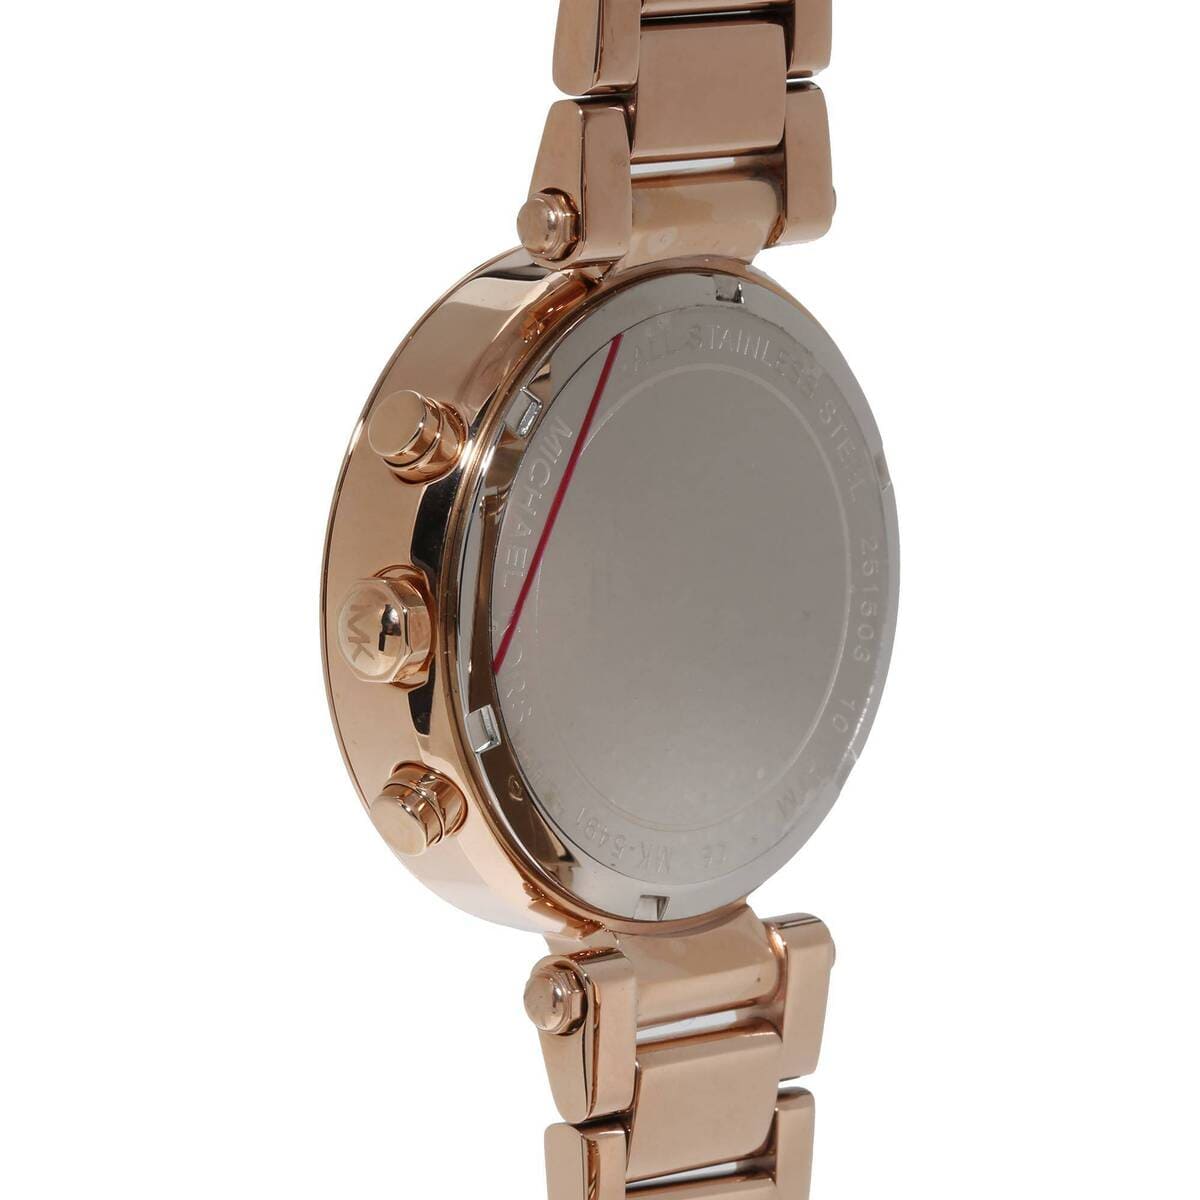 Women's watch-Michael Kors - jewelry - by owner - sale - craigslist